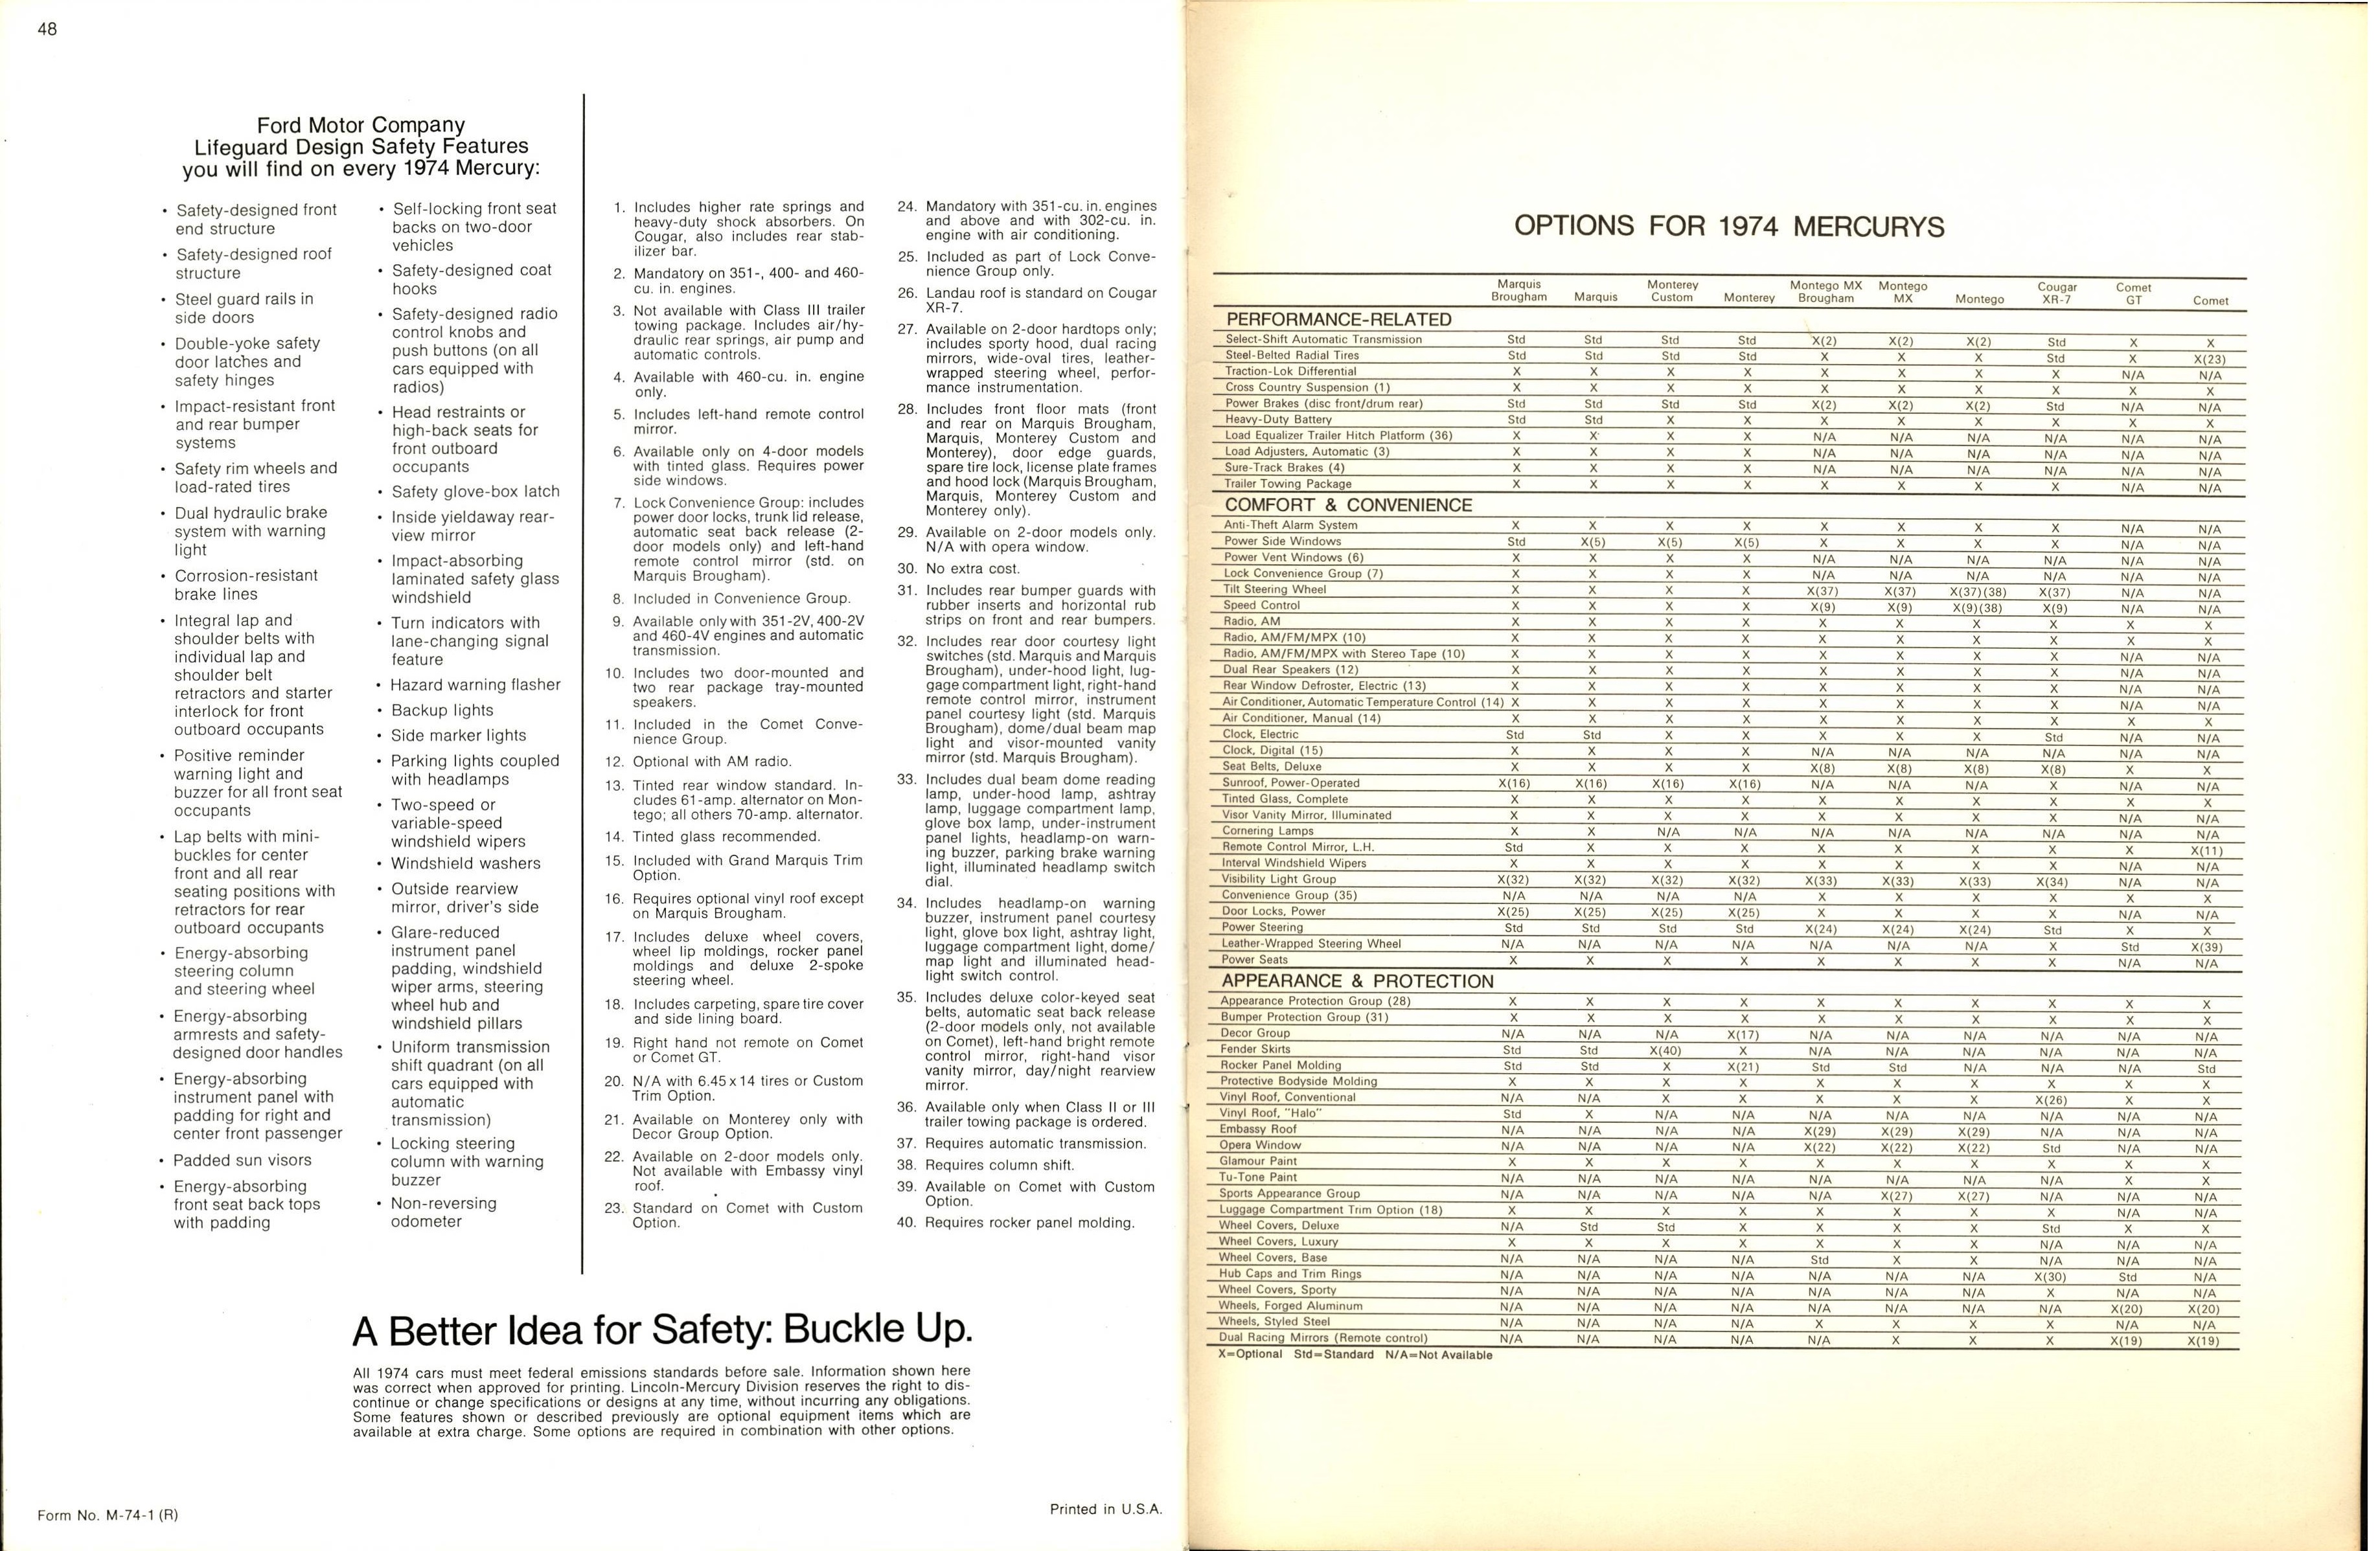 1974 Mercury Full Line Brochure 48-49